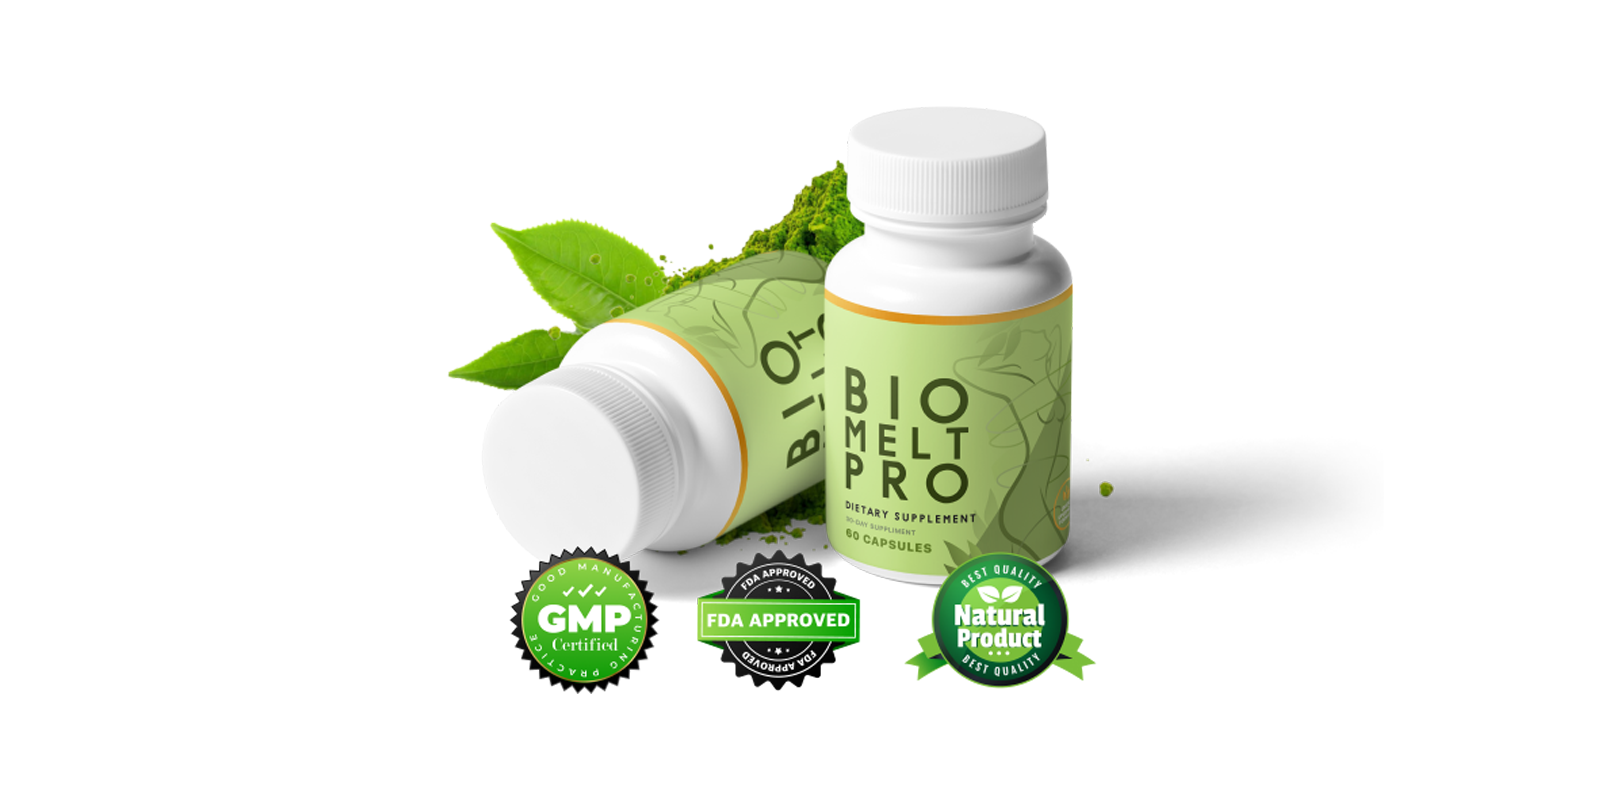 Bio Melt Pro Supplement: Effective Weight Loss Solution